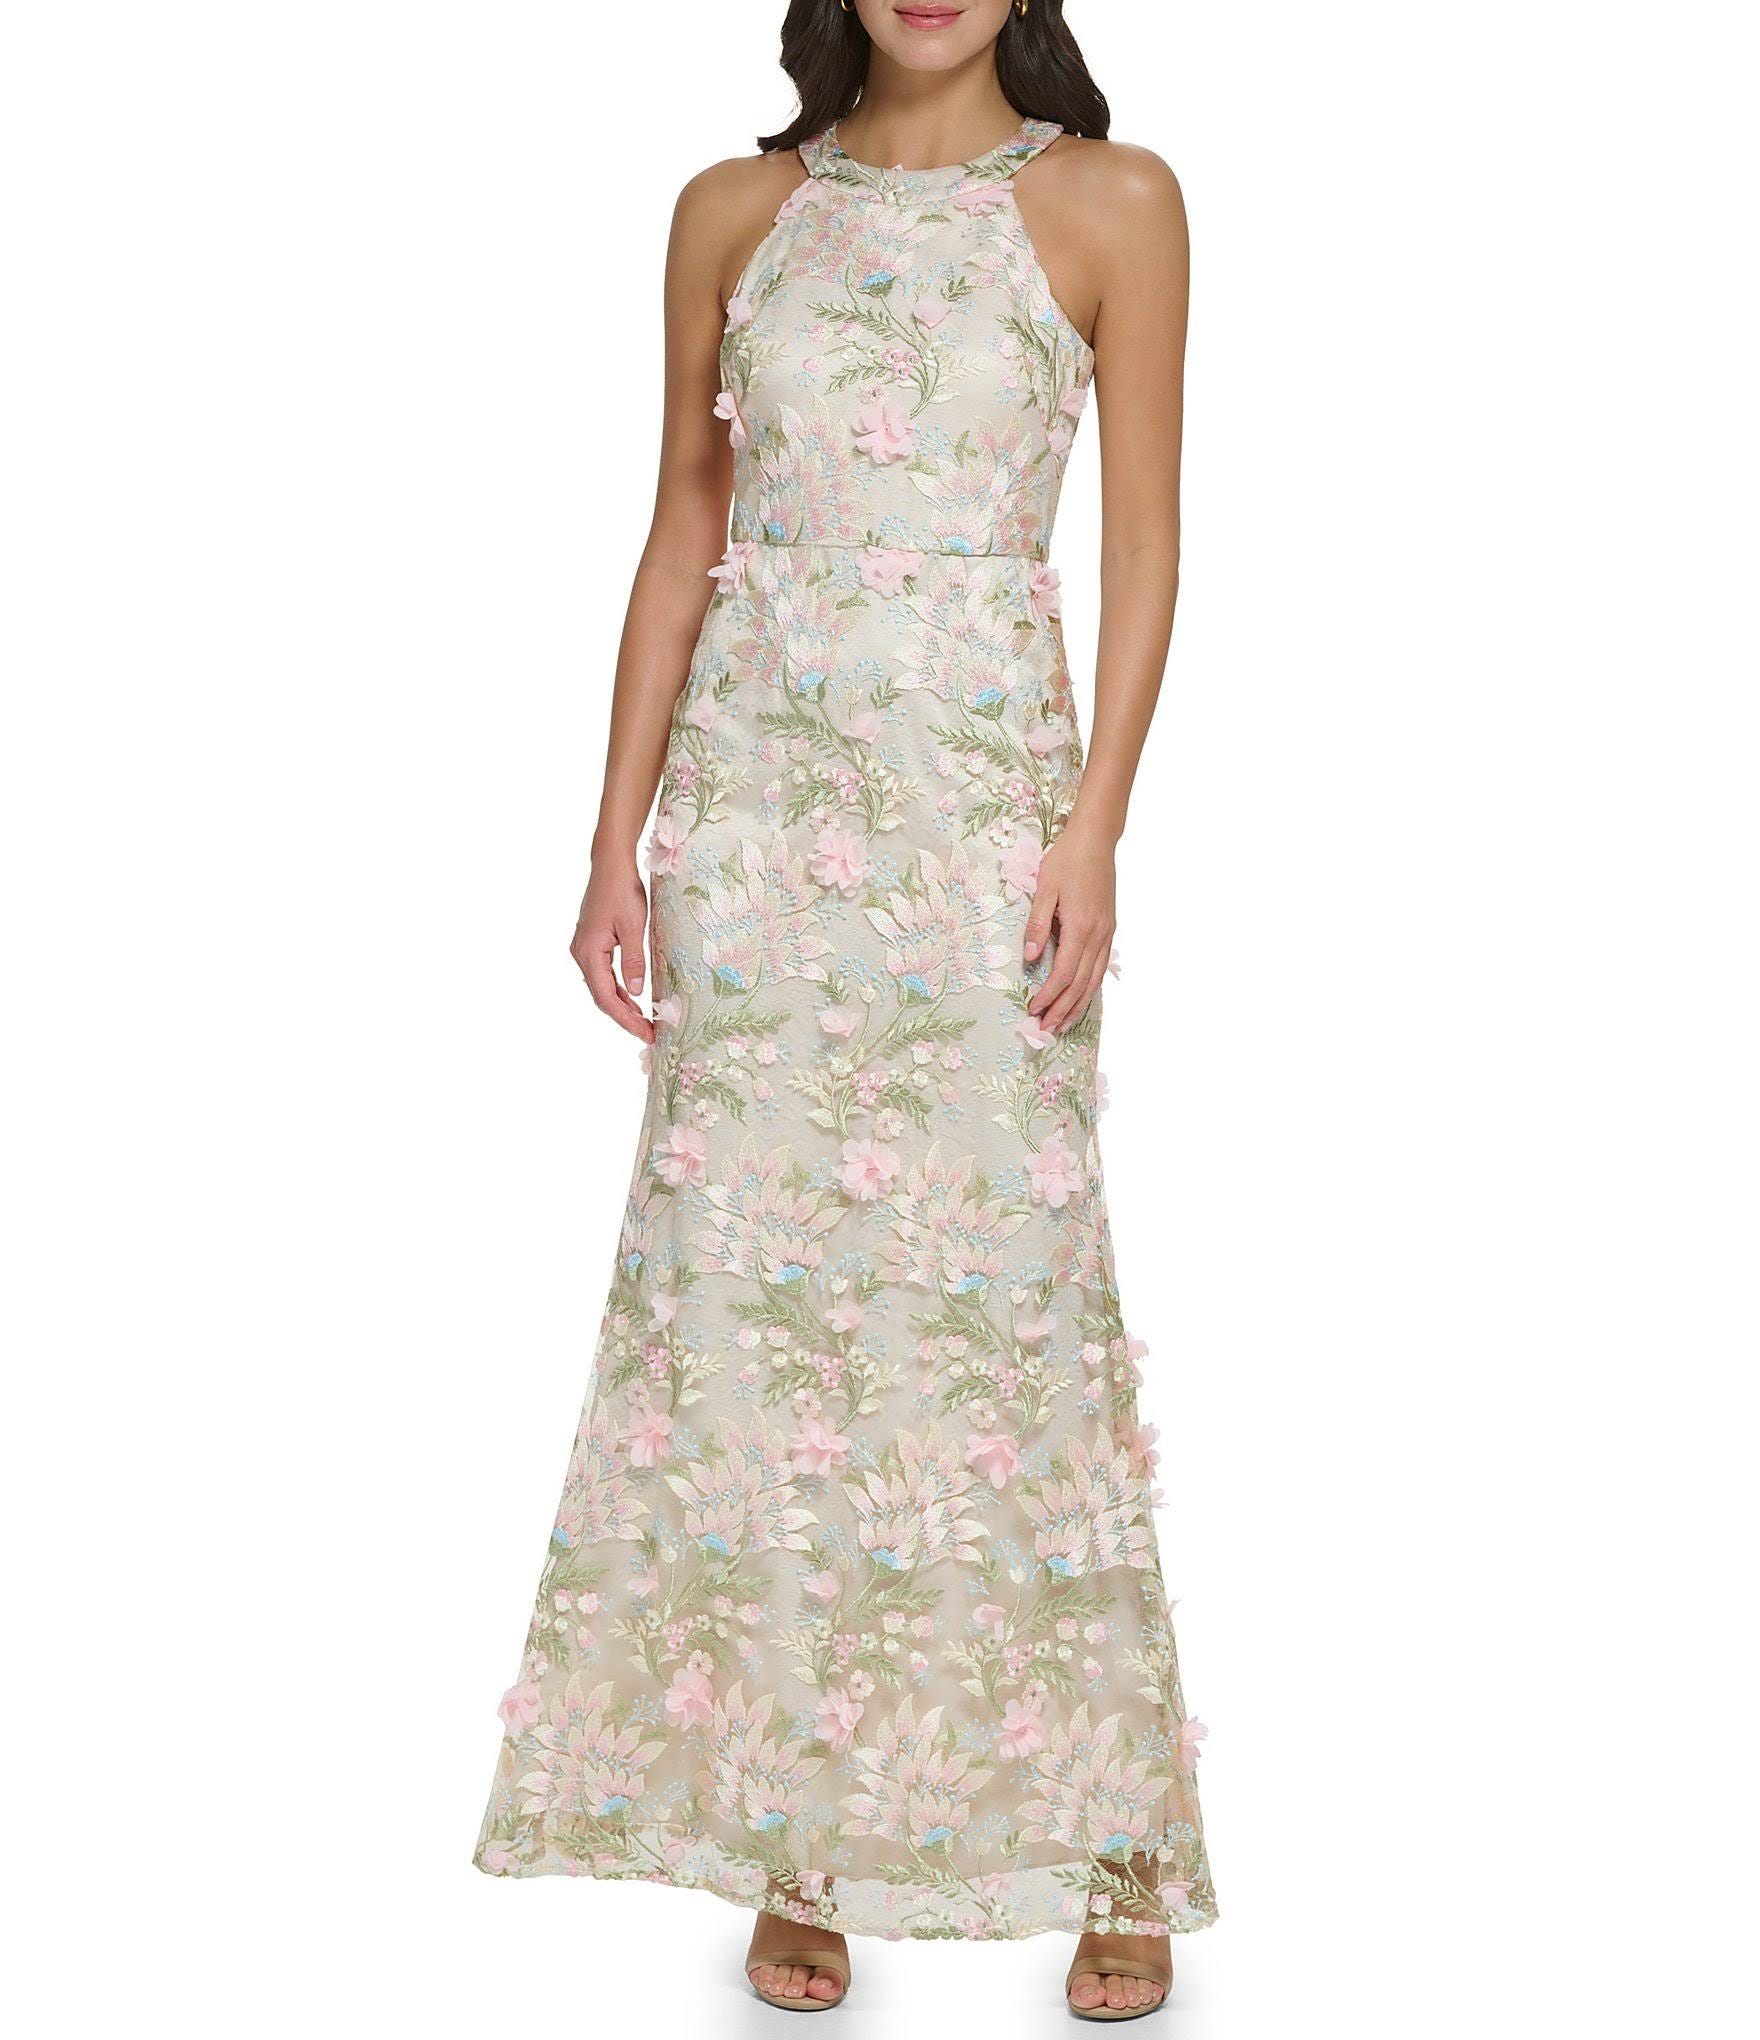 Elegant Halter Dress with 3D Floral Embroidery | Image